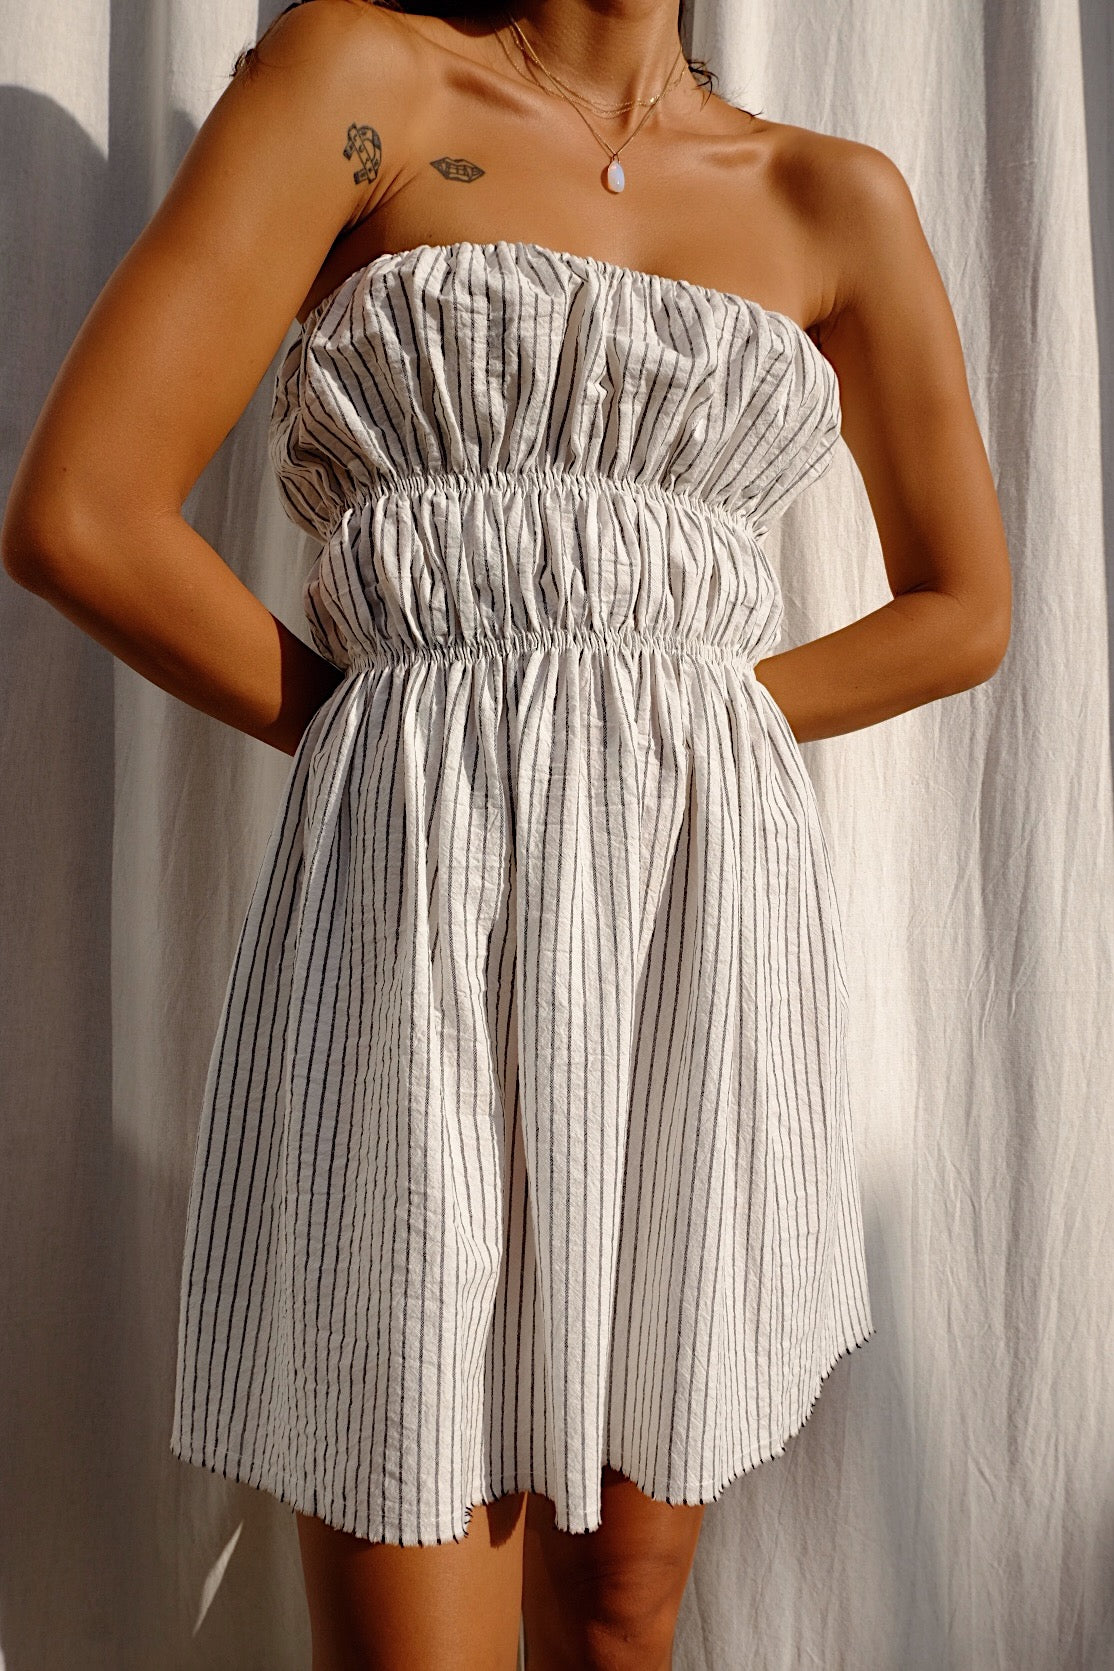 cotton stripe strapless tube top mini dress